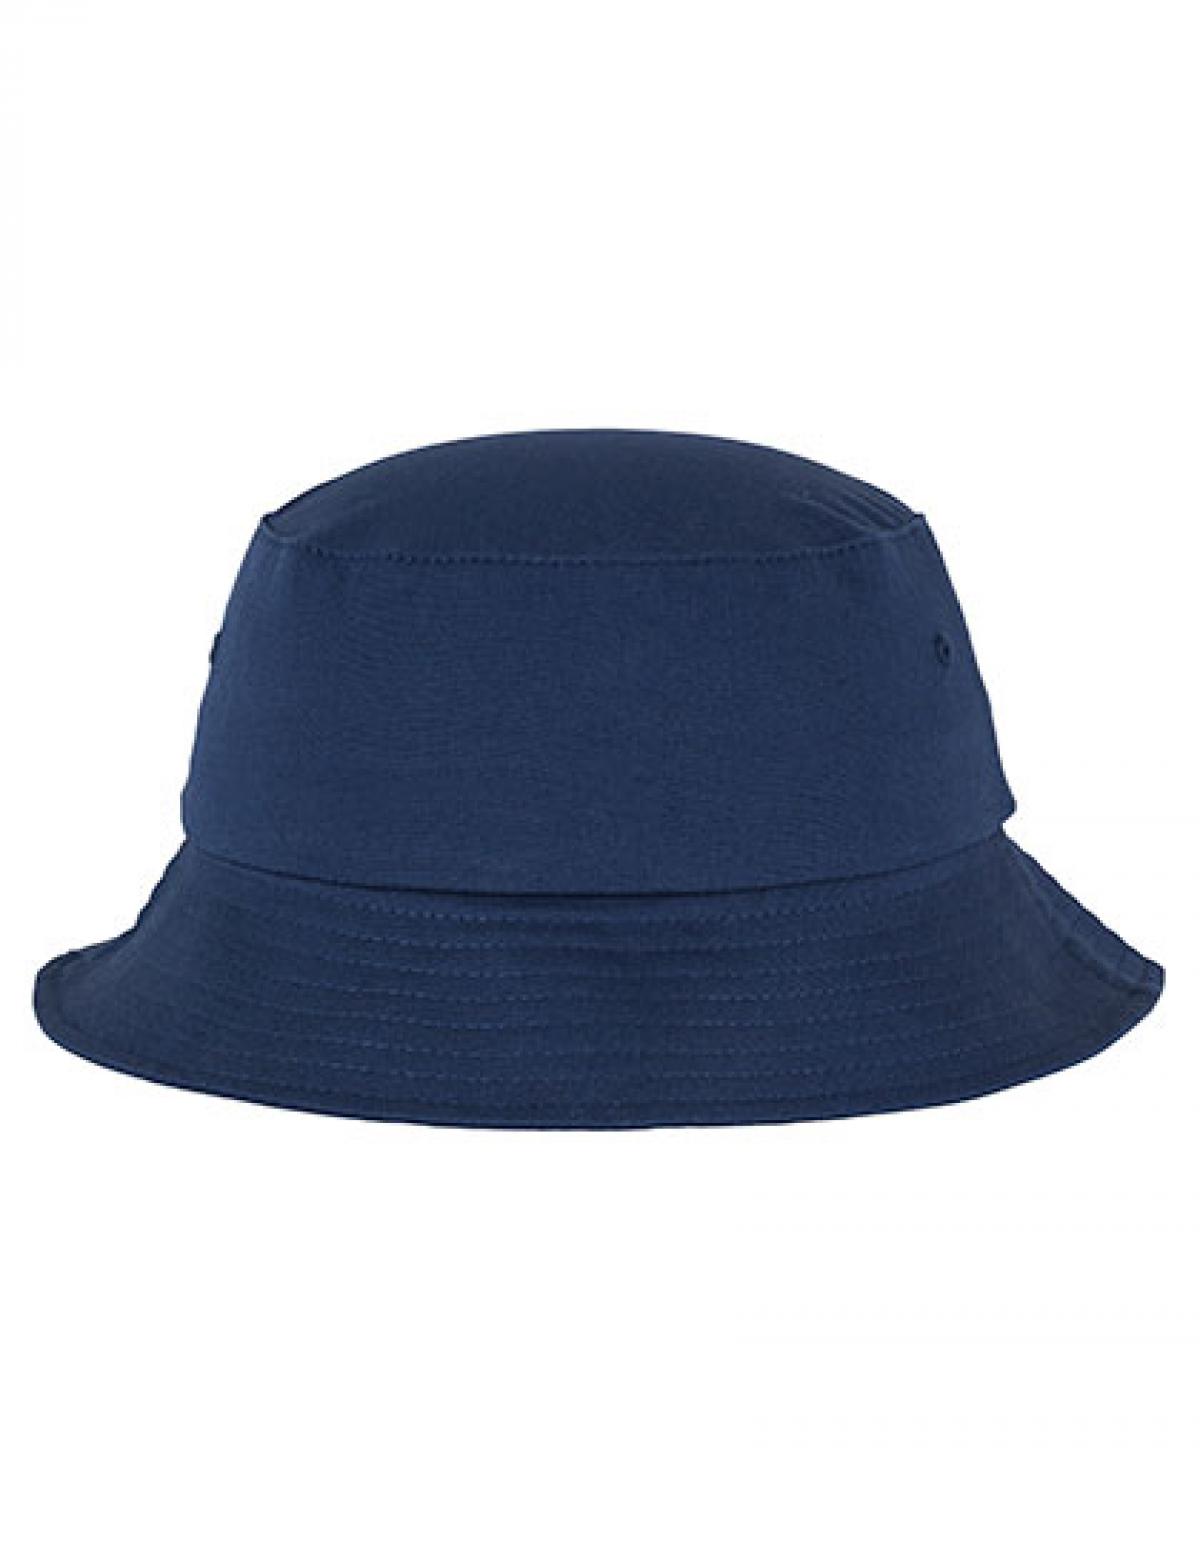 | Cotton / Bucket / Kappe Hut Hat eBay Mütze / | Twill FLEXFIT